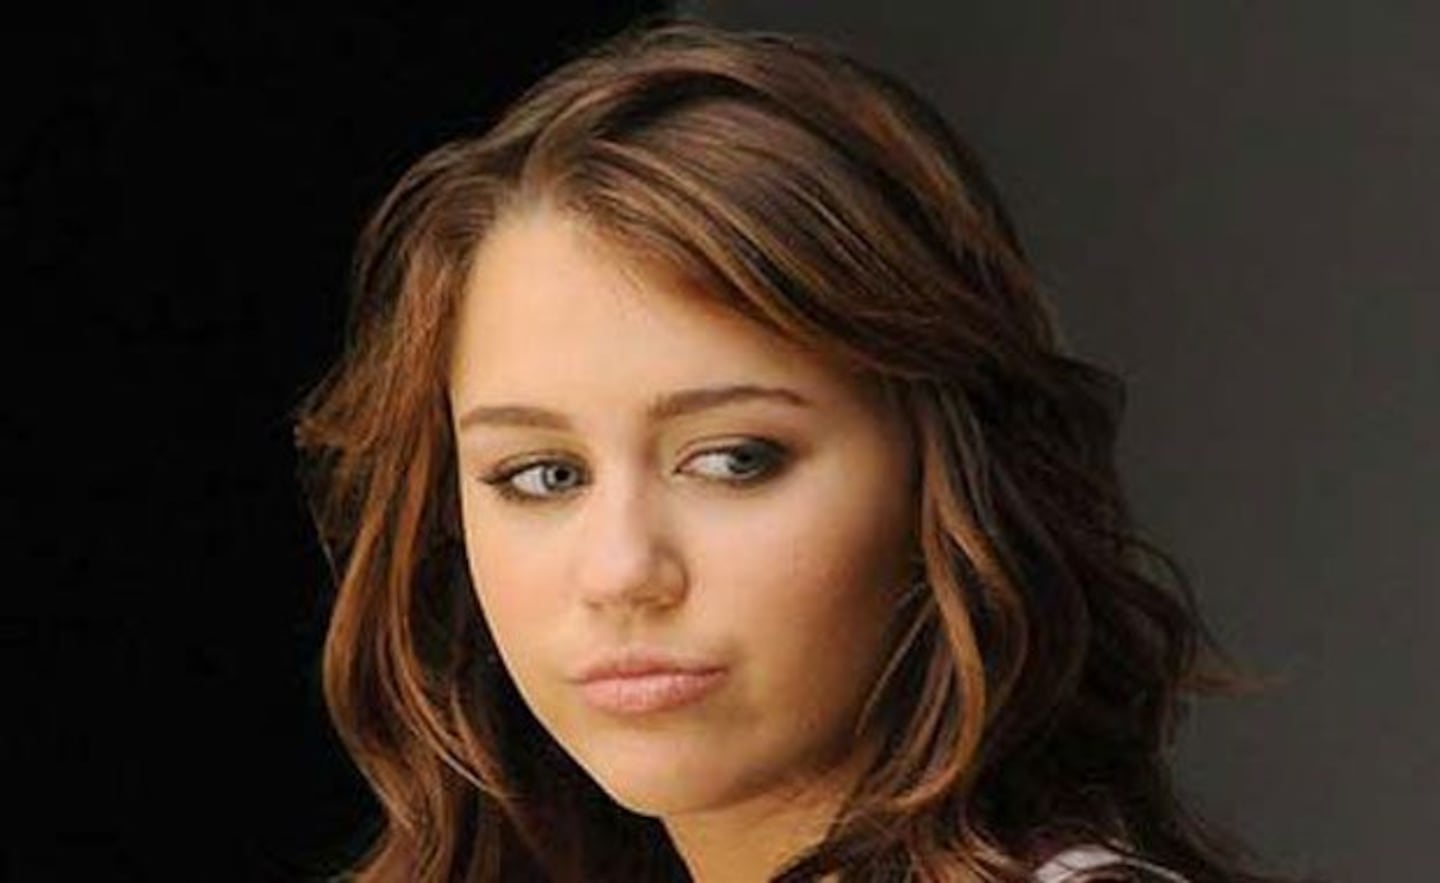 Miley Cyrus no protagonizó ningún video porno, a pesar del spam que circuló. (Foto: Web)